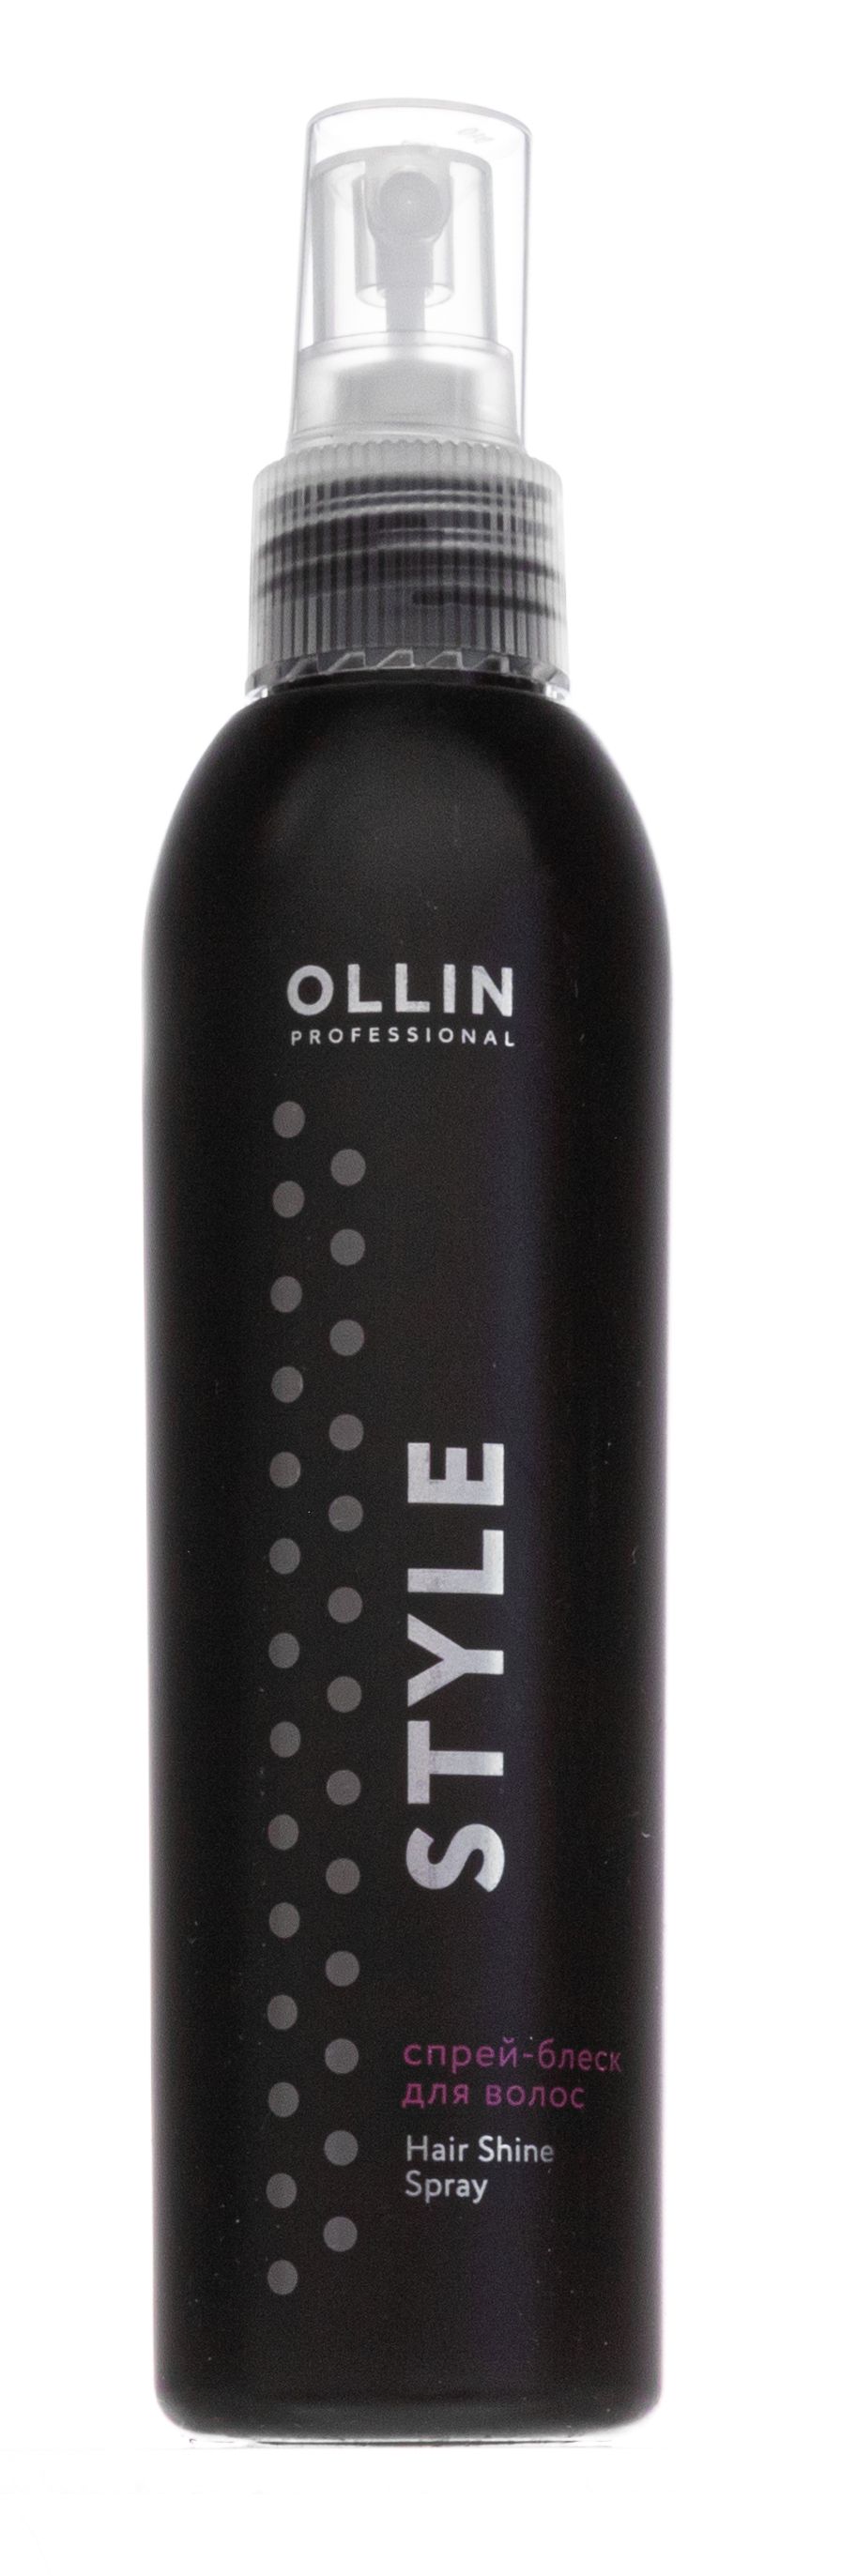 Ollin, Спрей-блеск для волос серии «Style», Фото интернет-магазин Премиум-Косметика.РФ